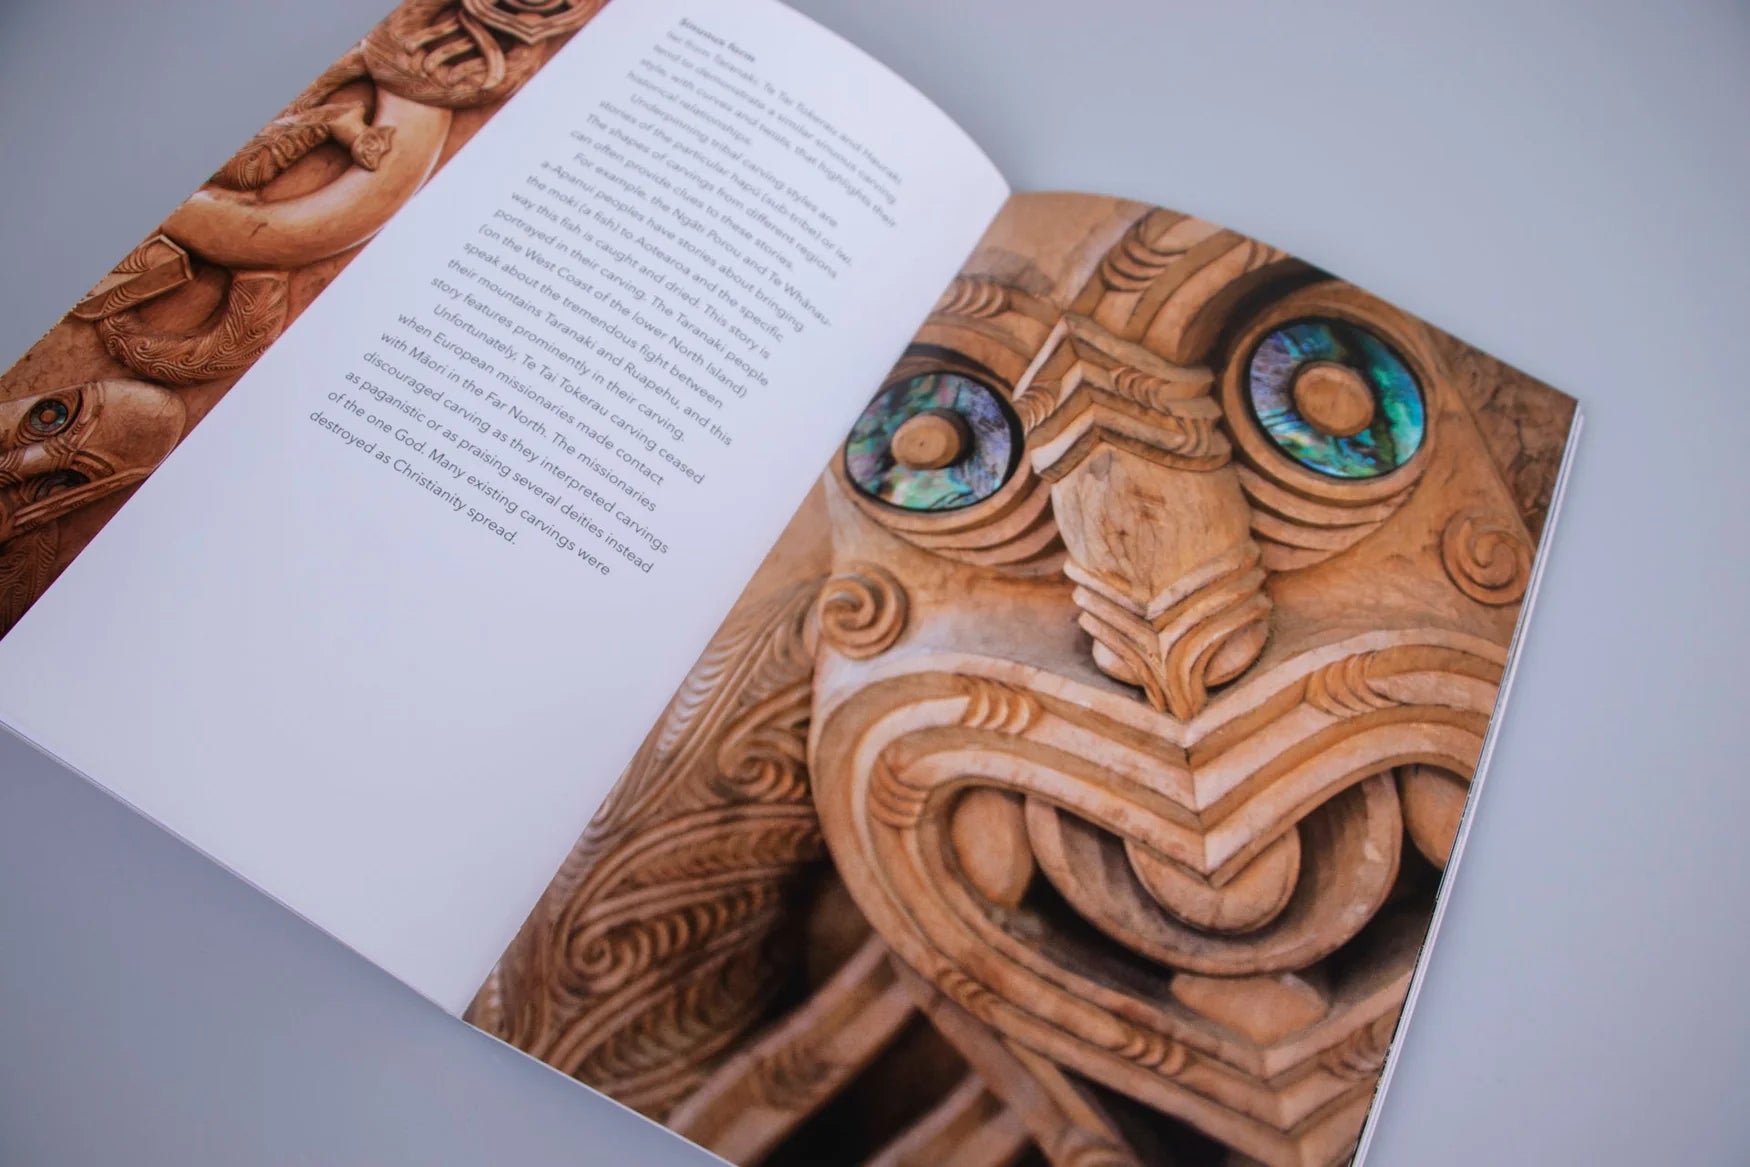 Māori Carving: The Art of Recording Māori History from Ngā Kete Iho & Huia Publishers